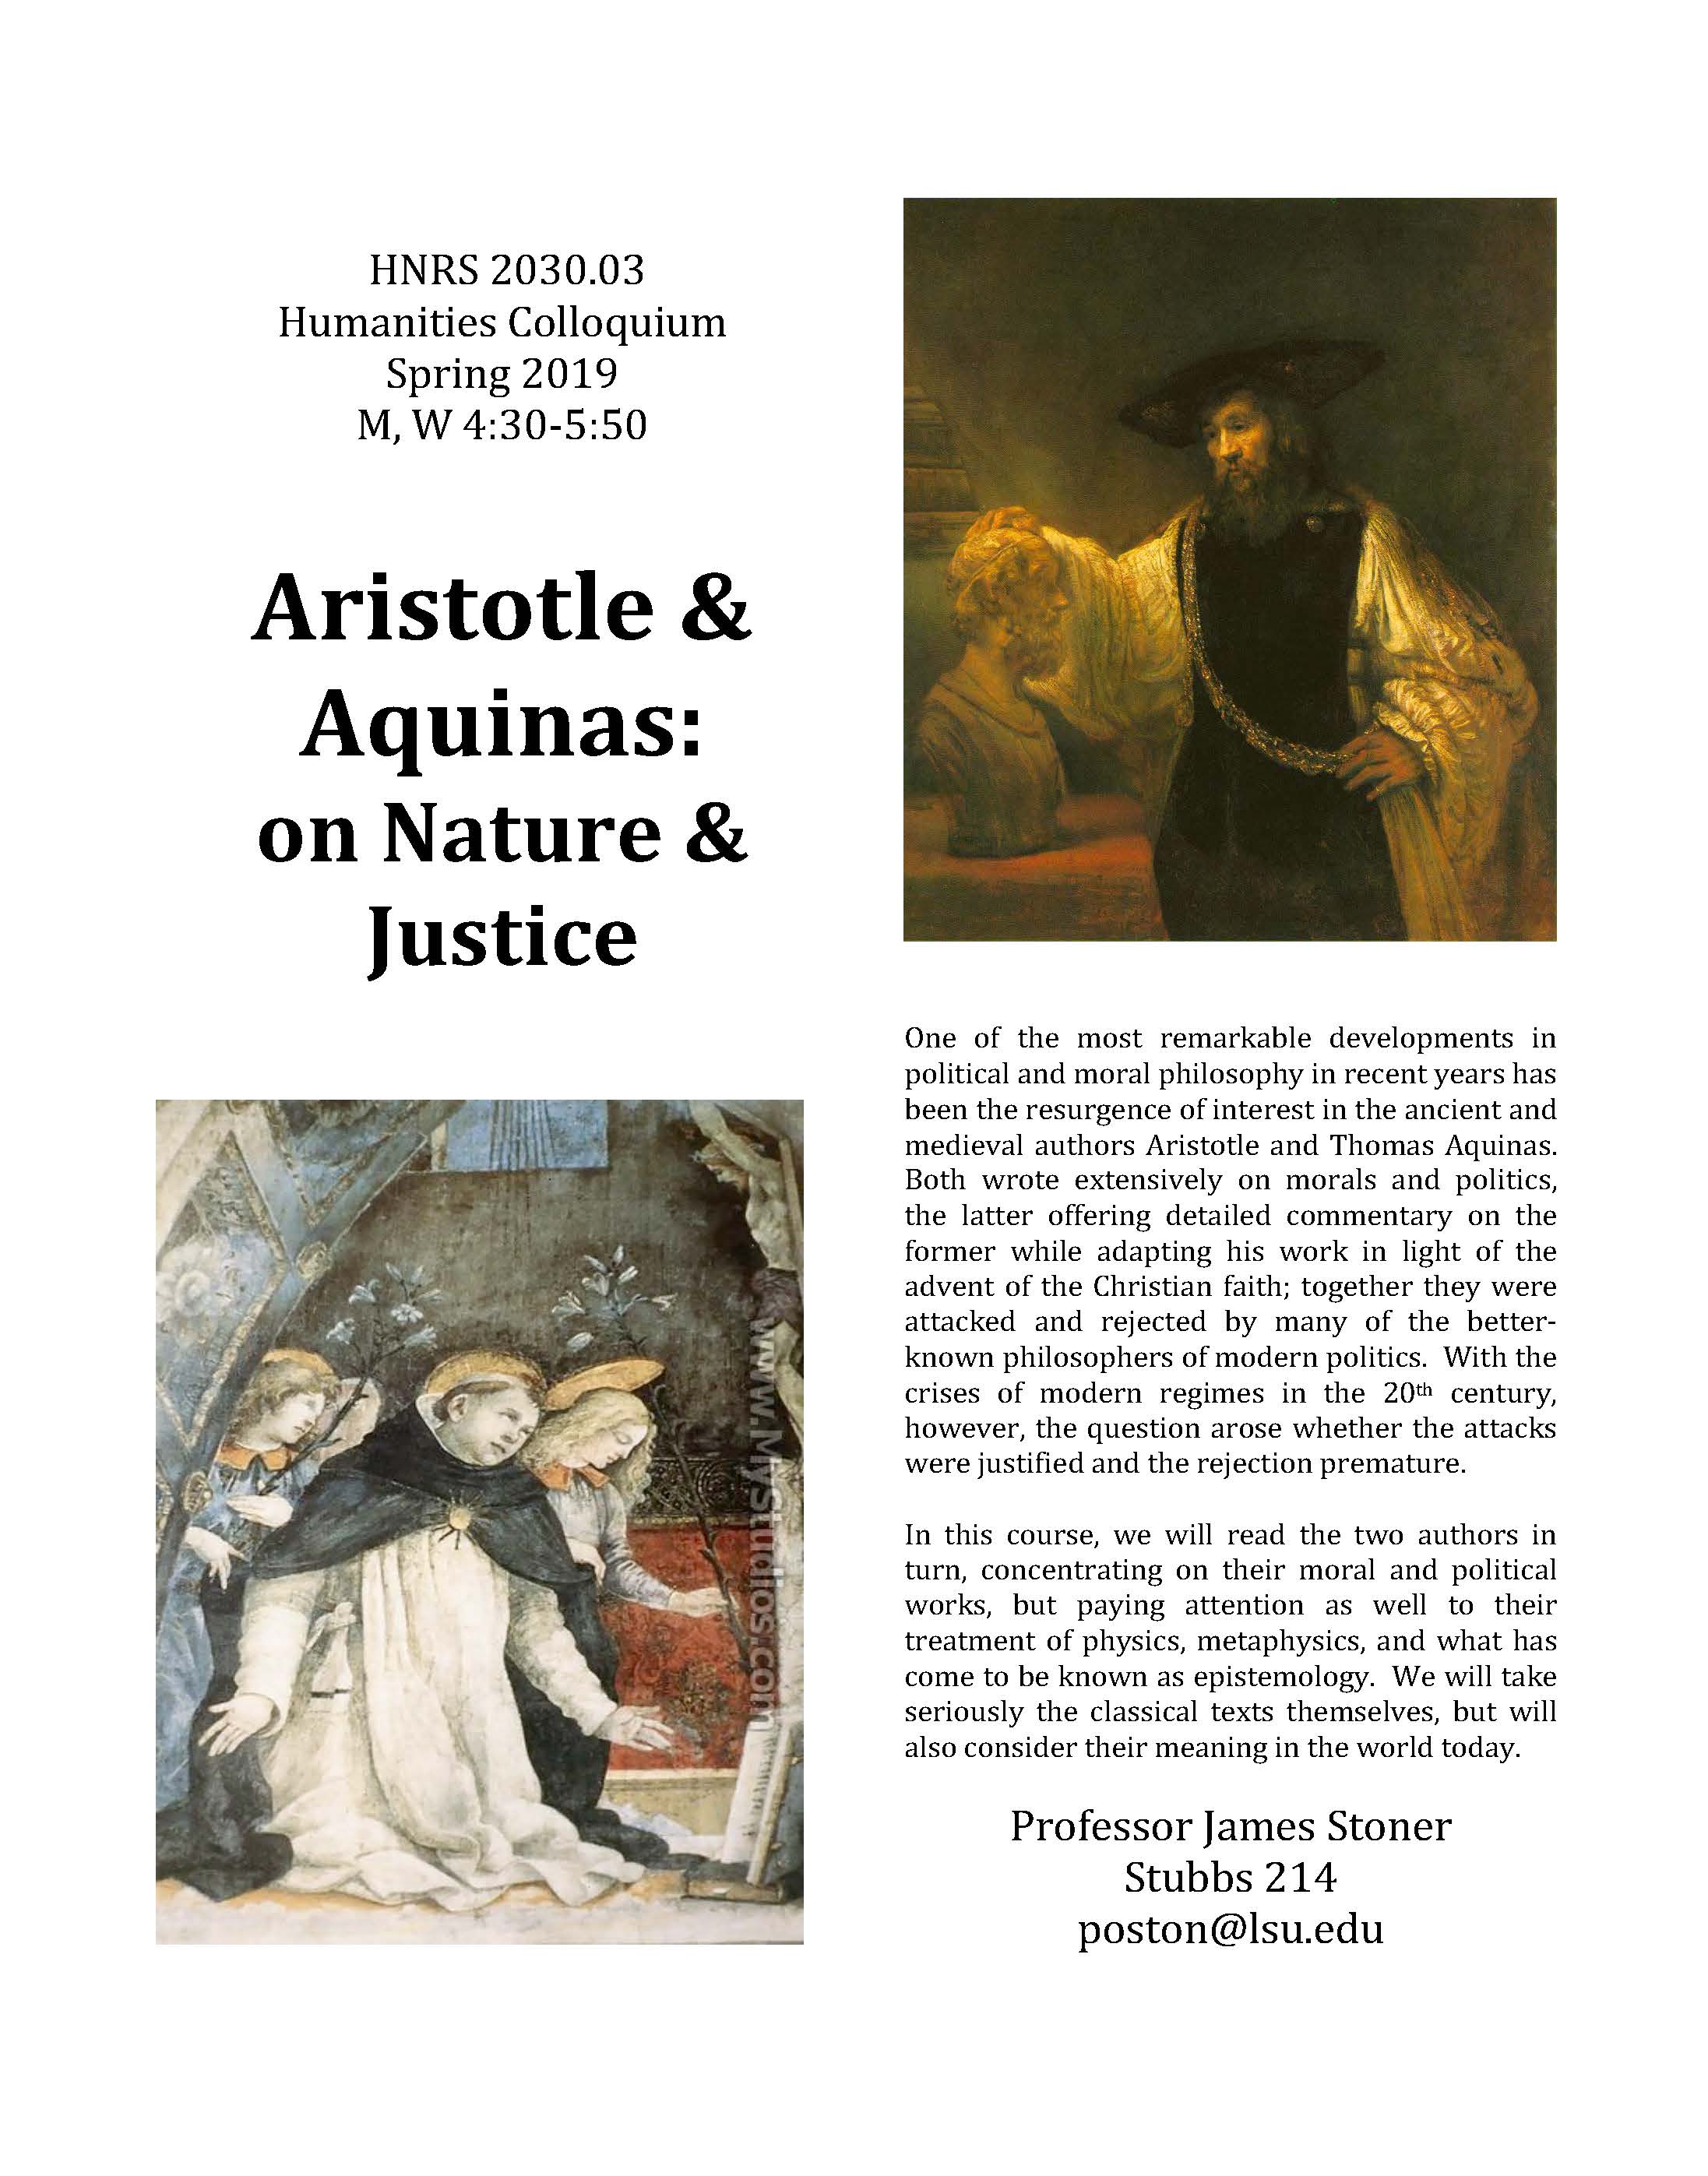 Aristotle and Aquinas Flier